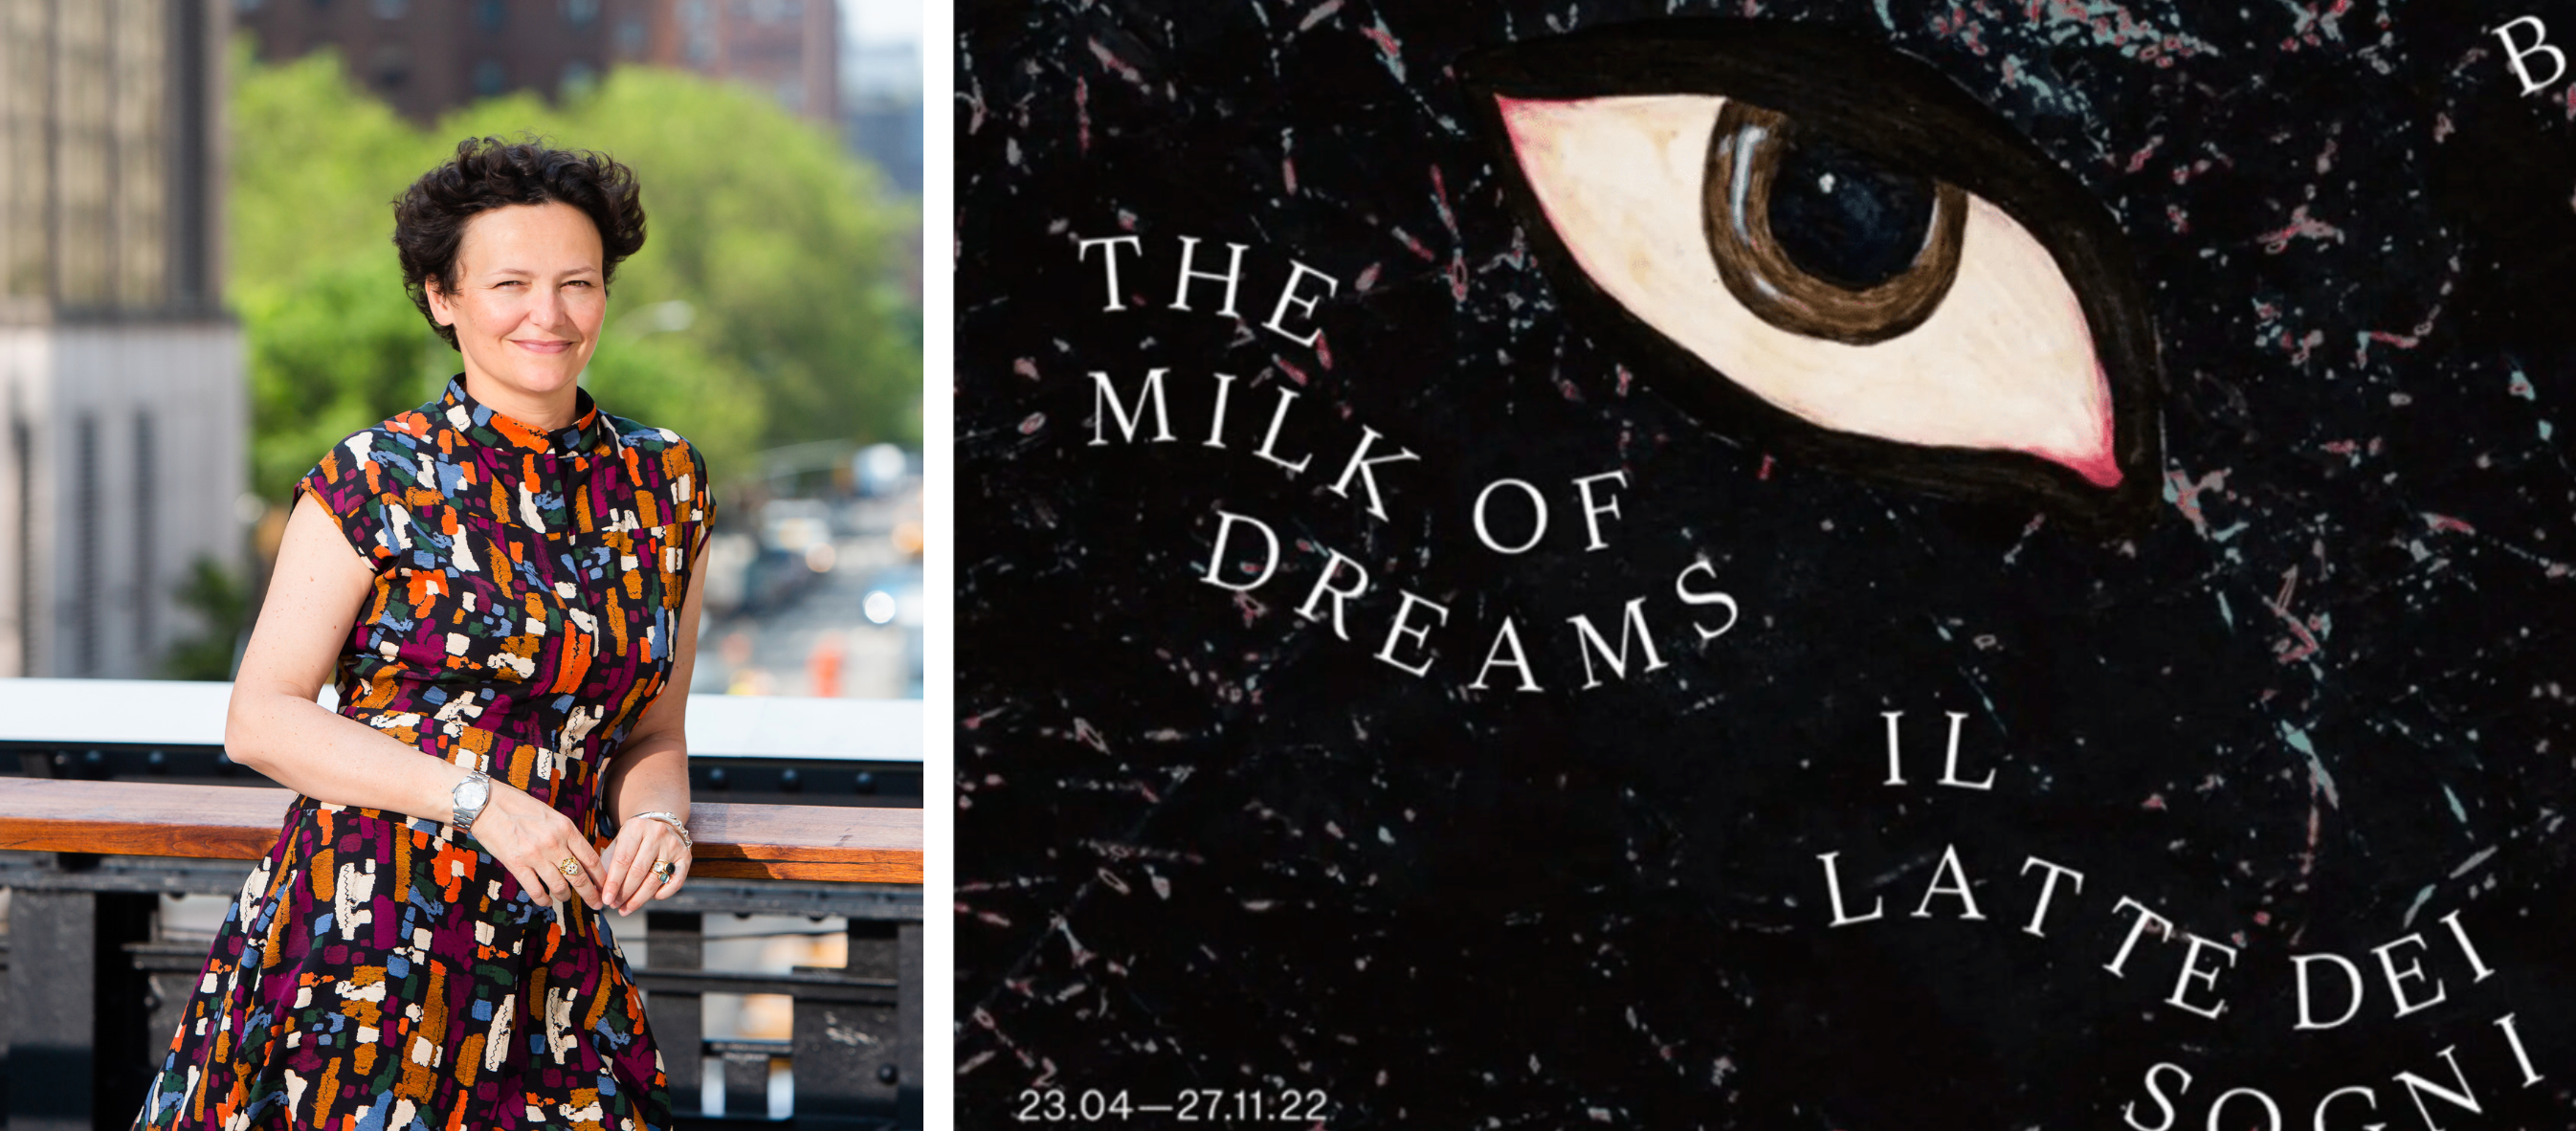 New York | Curator’s Talk with Cecilia Alemani, Artistic Director of the 59th Venice Biennale, on “The Milk of Dreams”